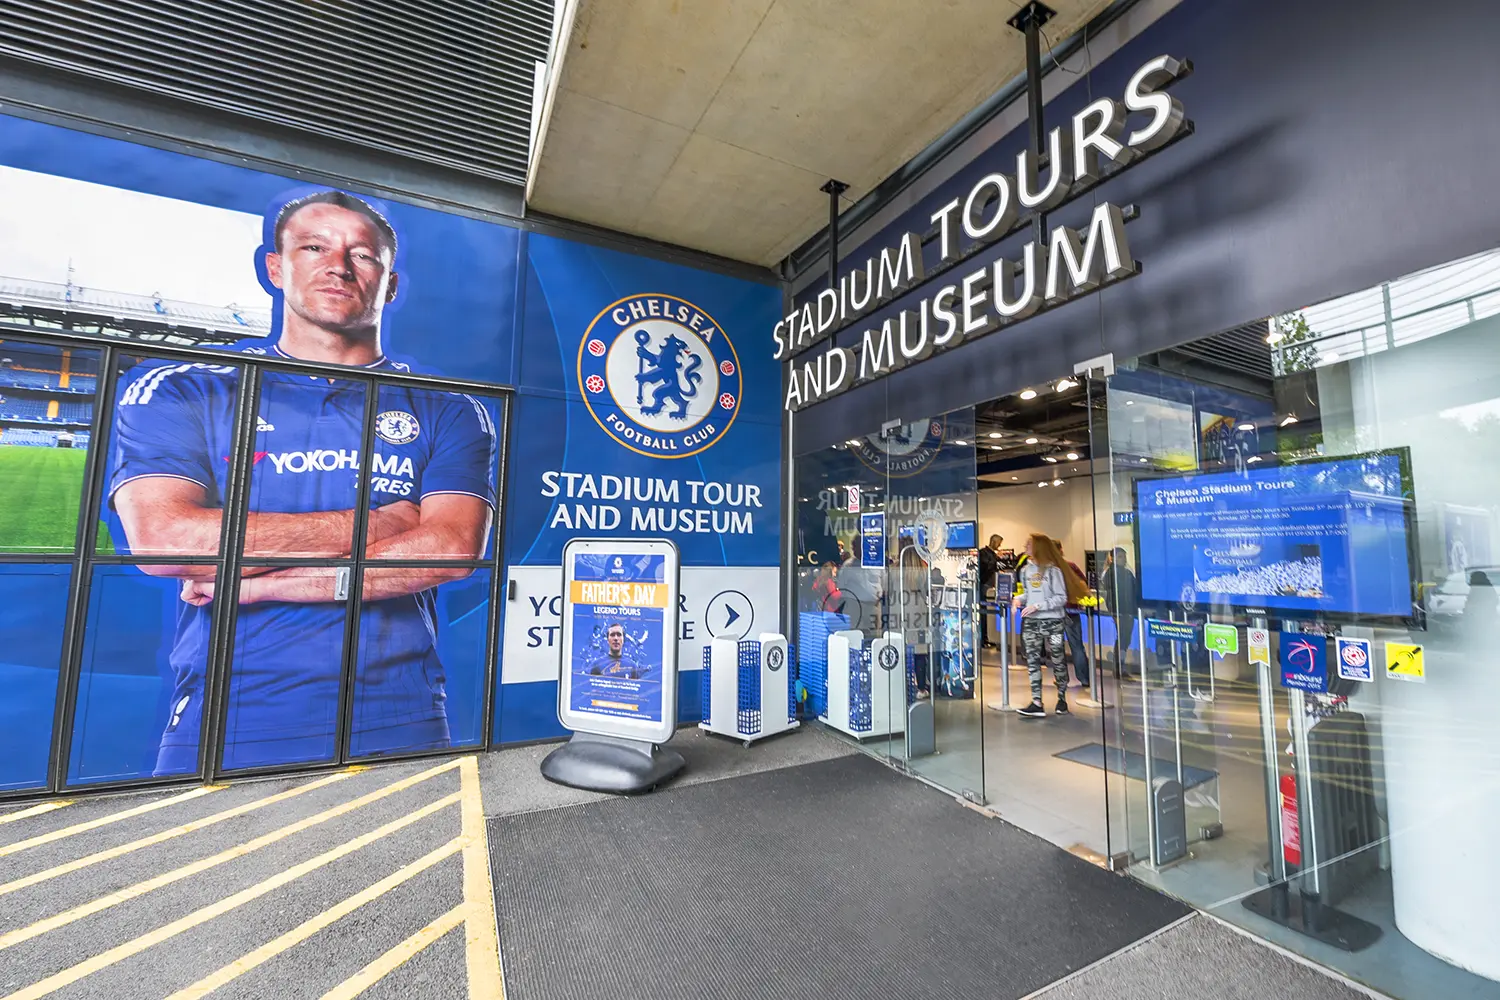 Chelsea FC Museum in London, UK